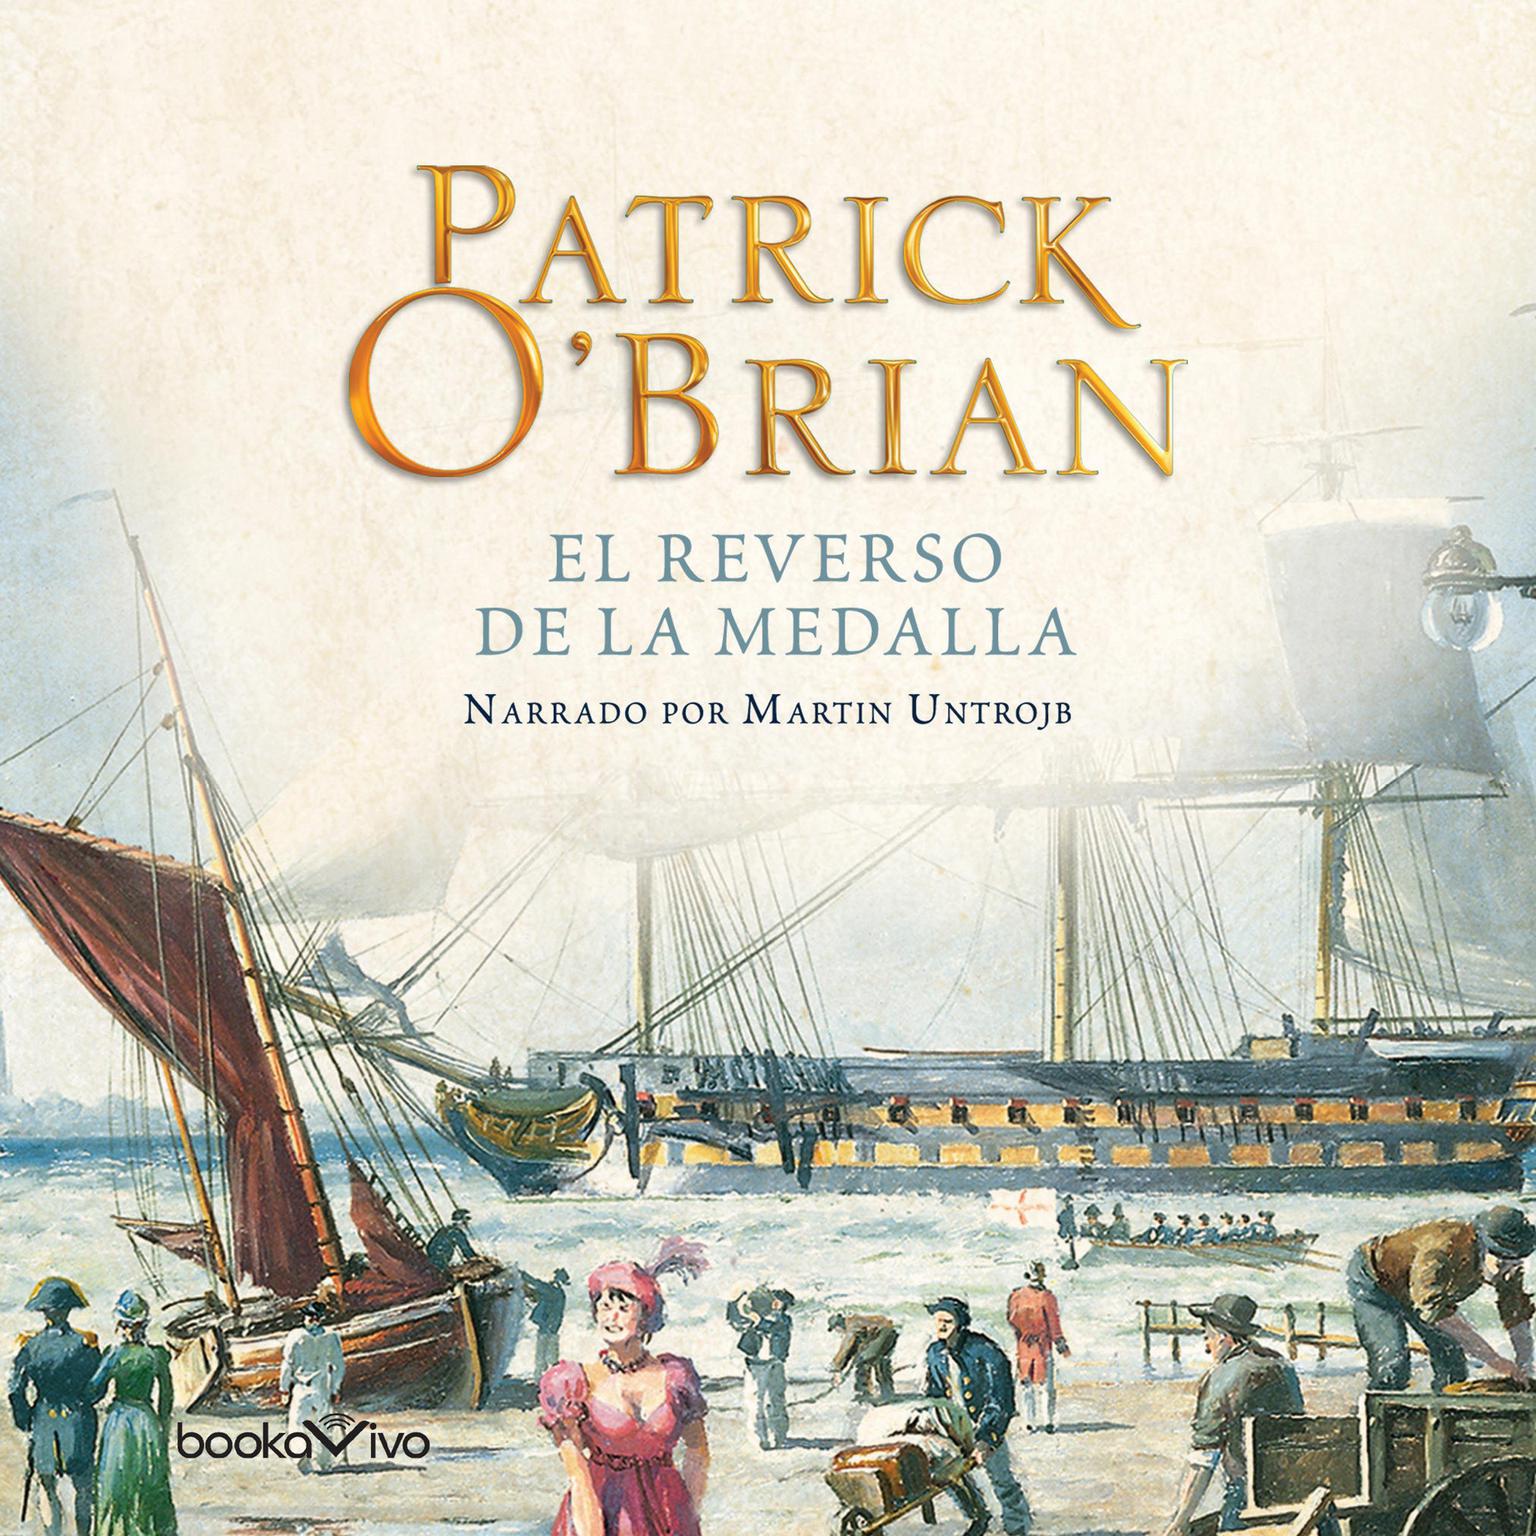 El Reverso de la Medalla (The Reverse of the Medal) Audiobook, by Patrick O'Brian